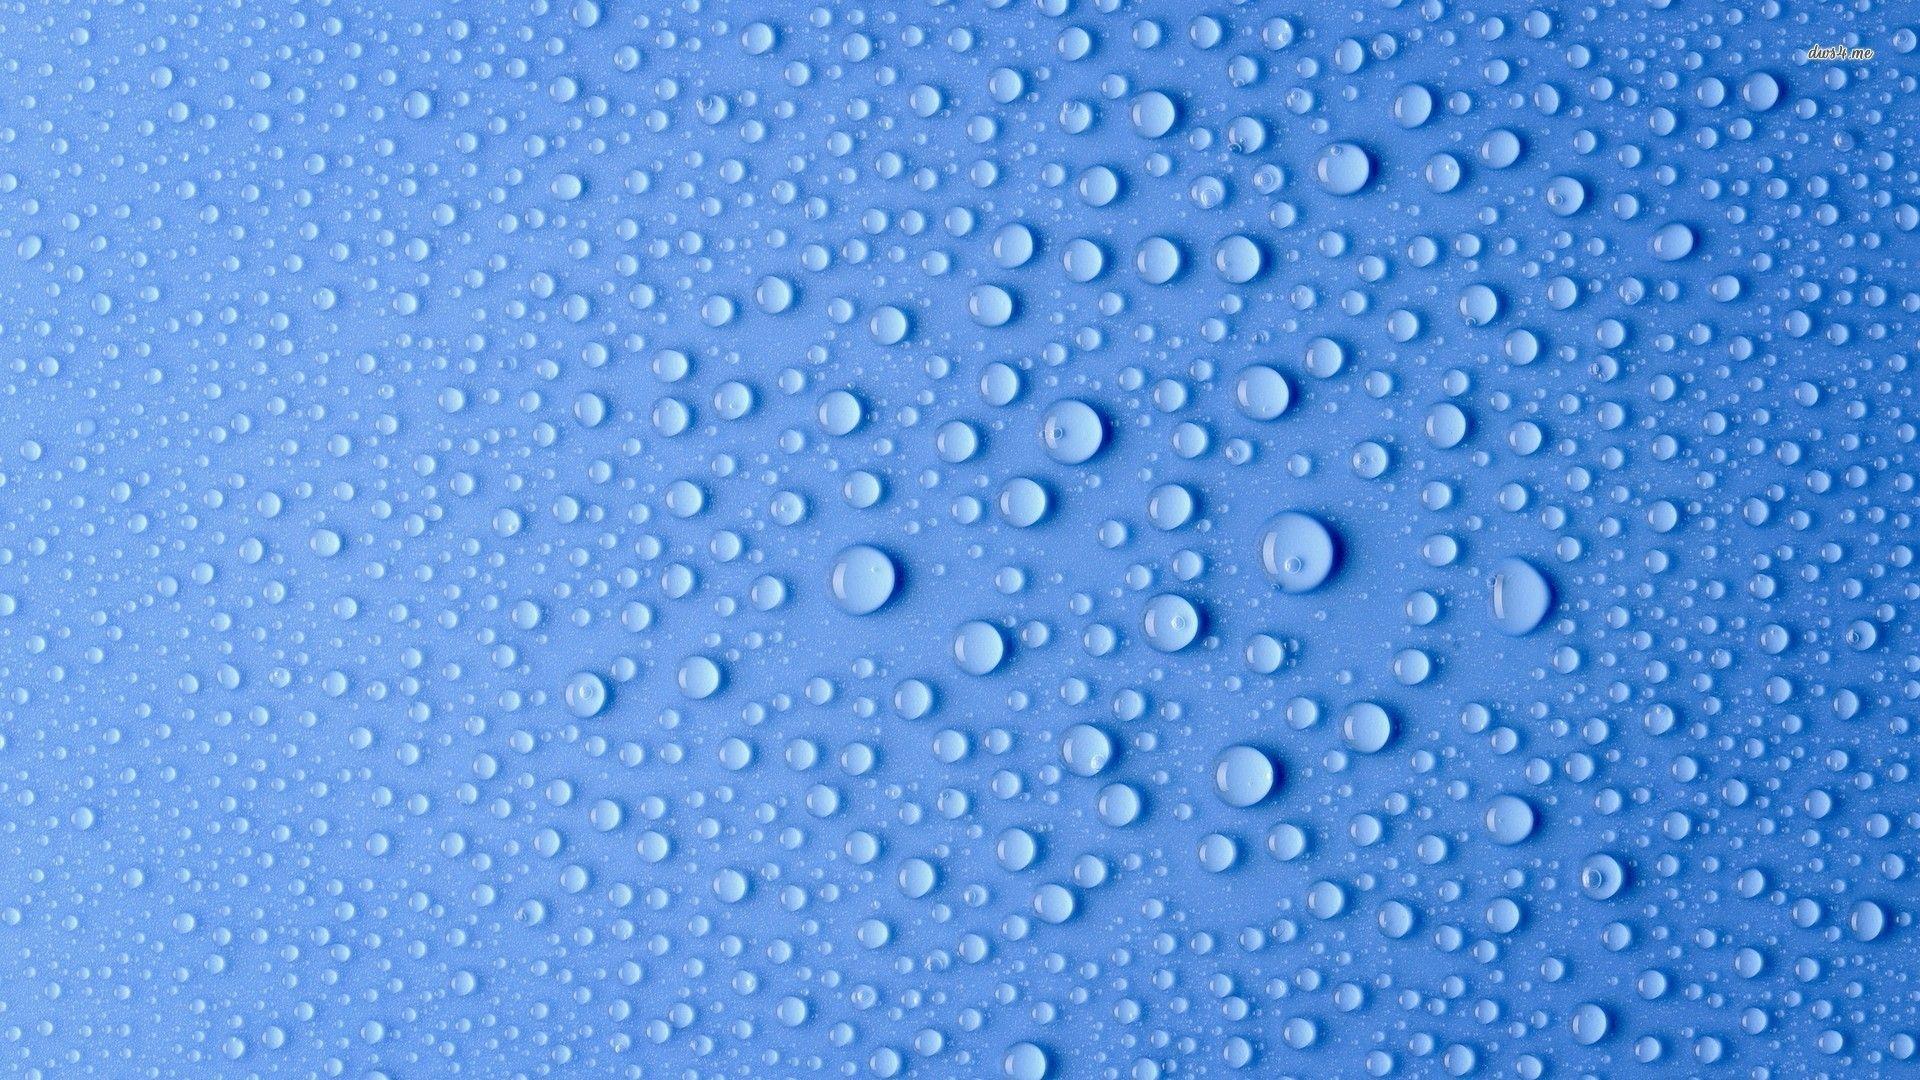 Water drops wallpaper wallpaper